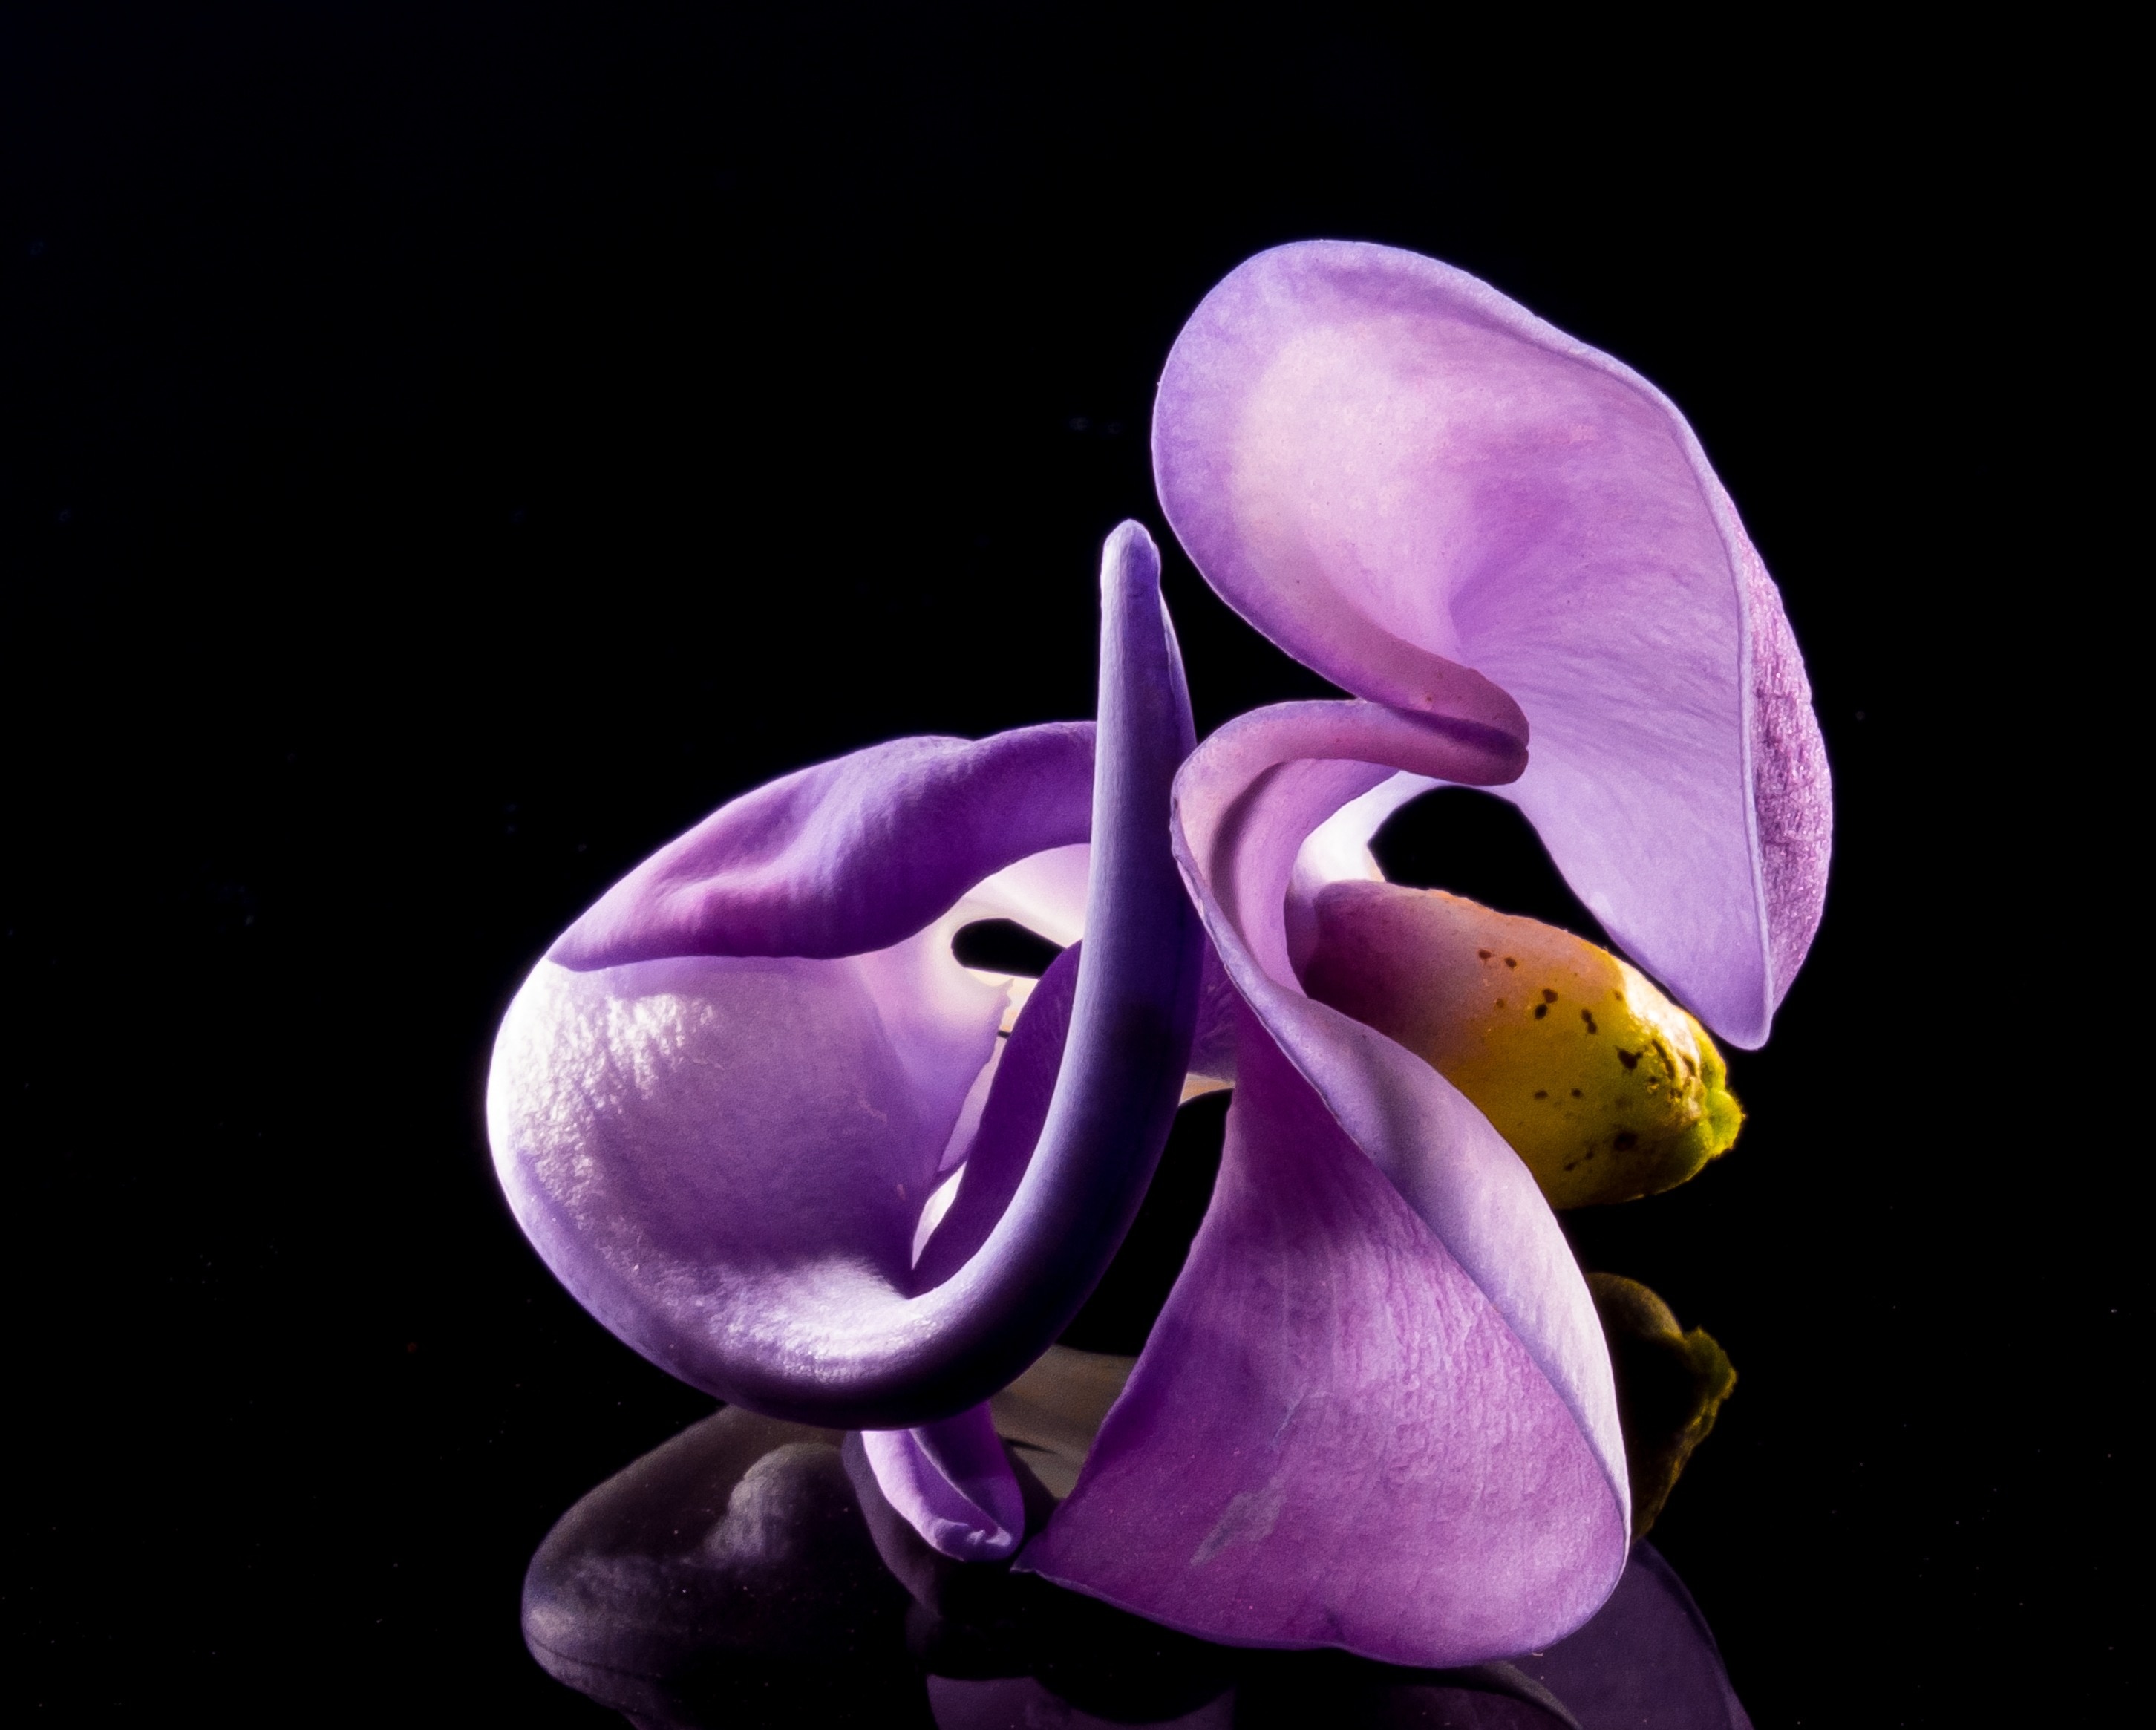 purple petals